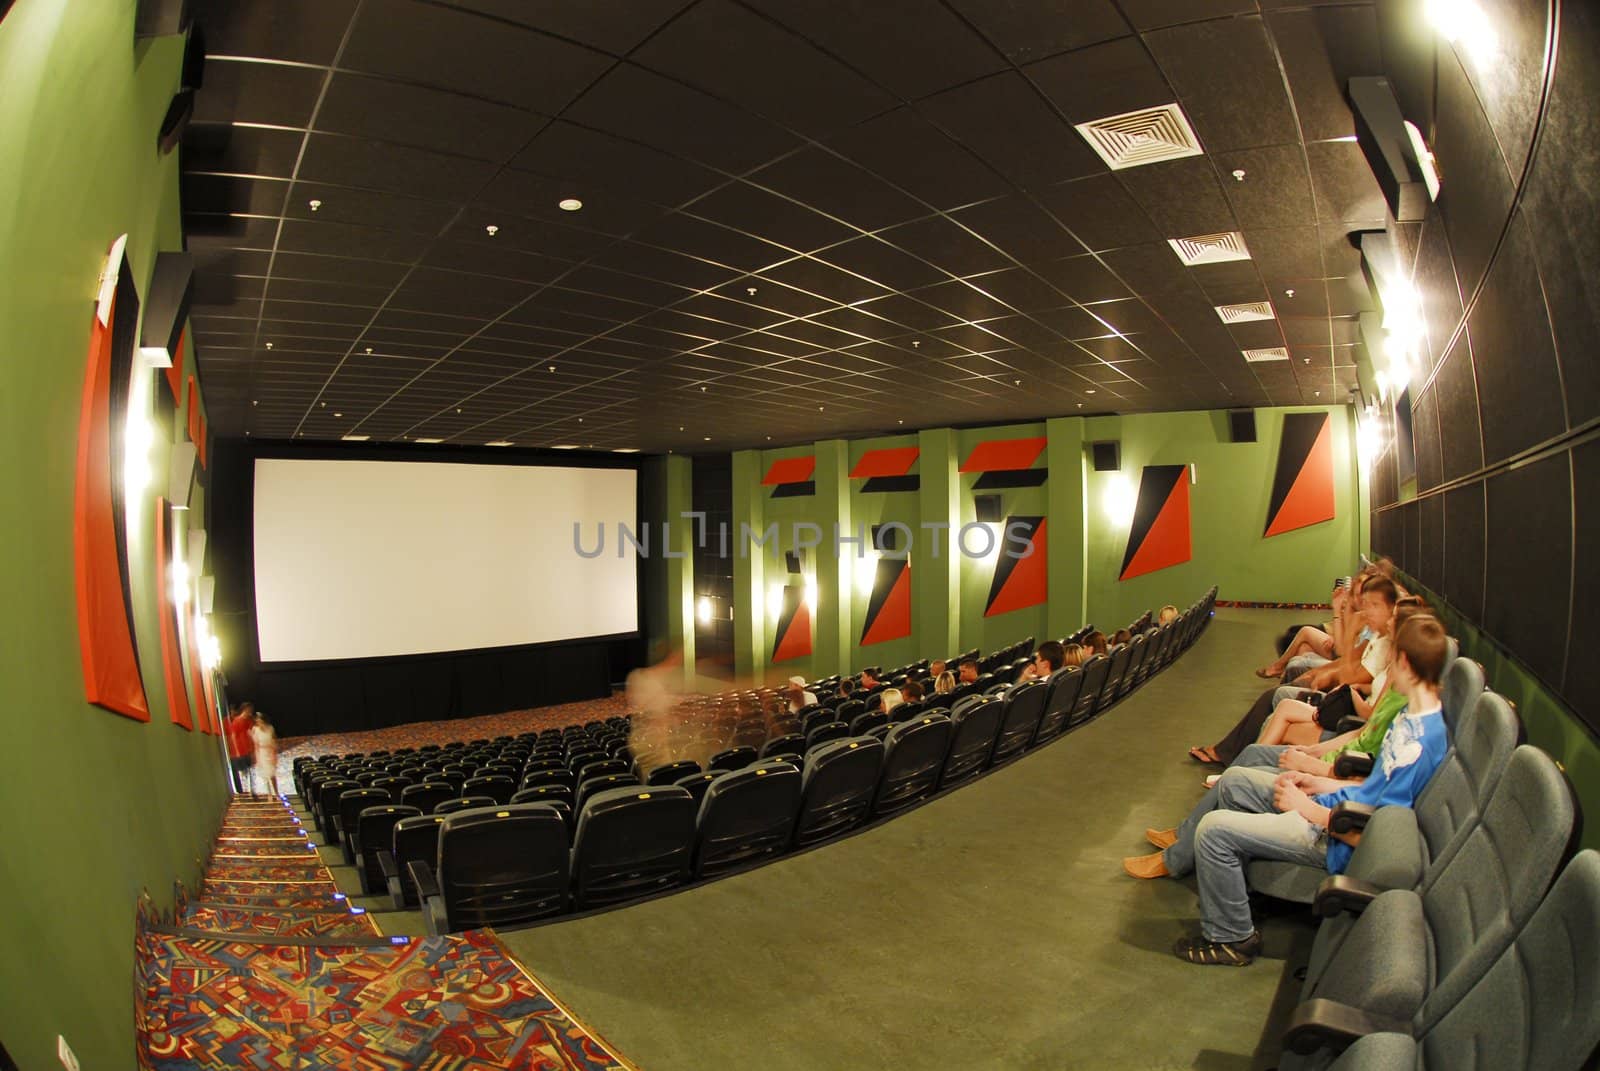 Cinema red seats in cinema hall 5